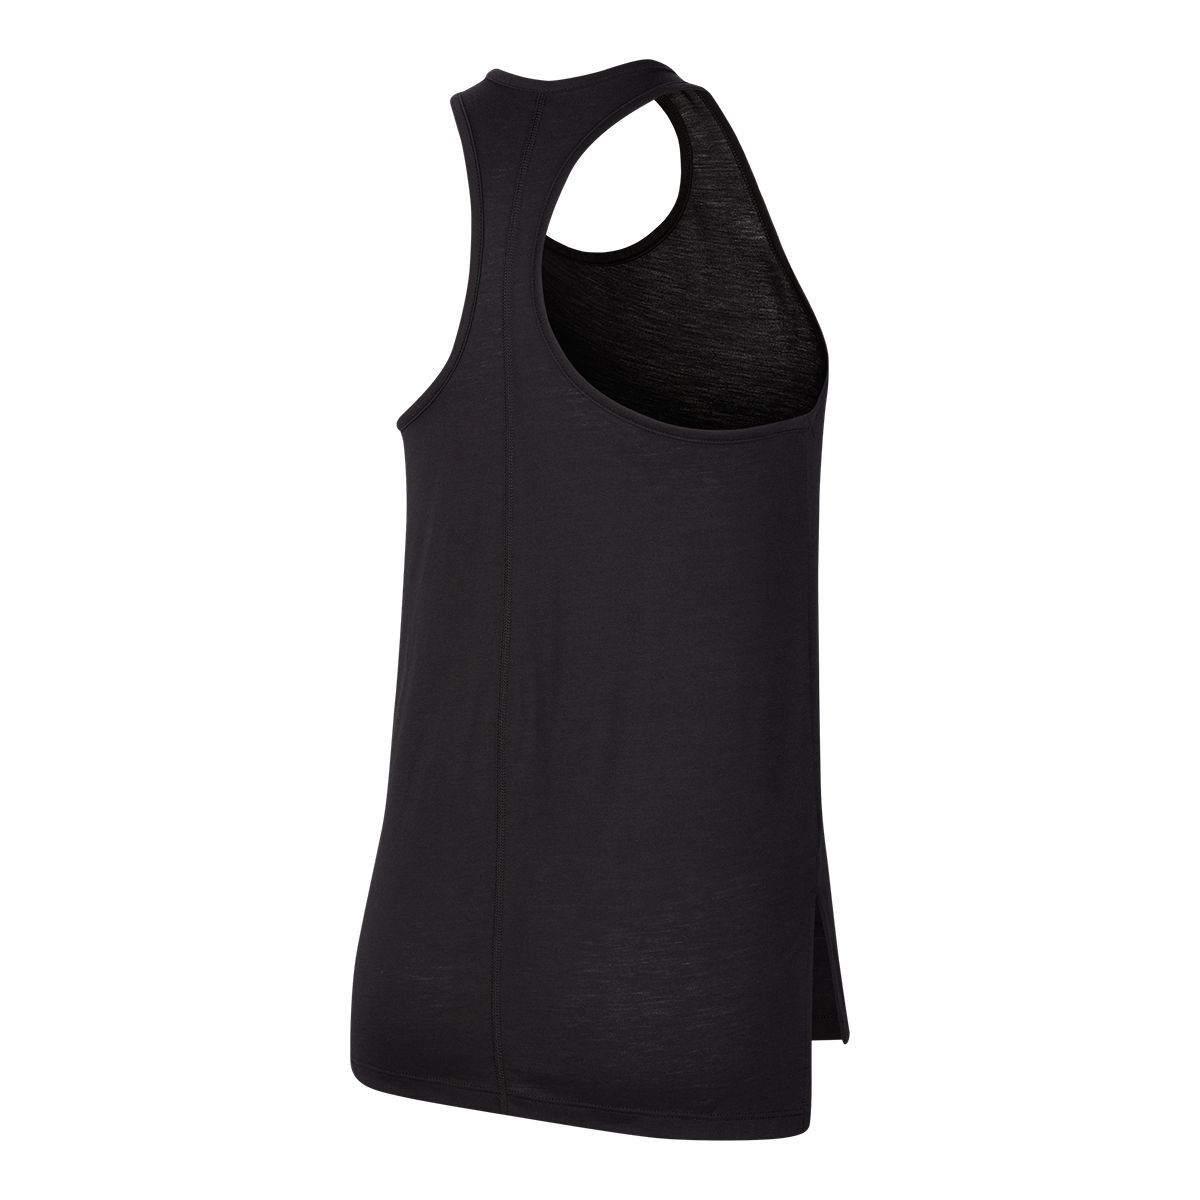 Nike Women's Yoga Layer Tank Top, Standard Fit, Sleeveless, Dri